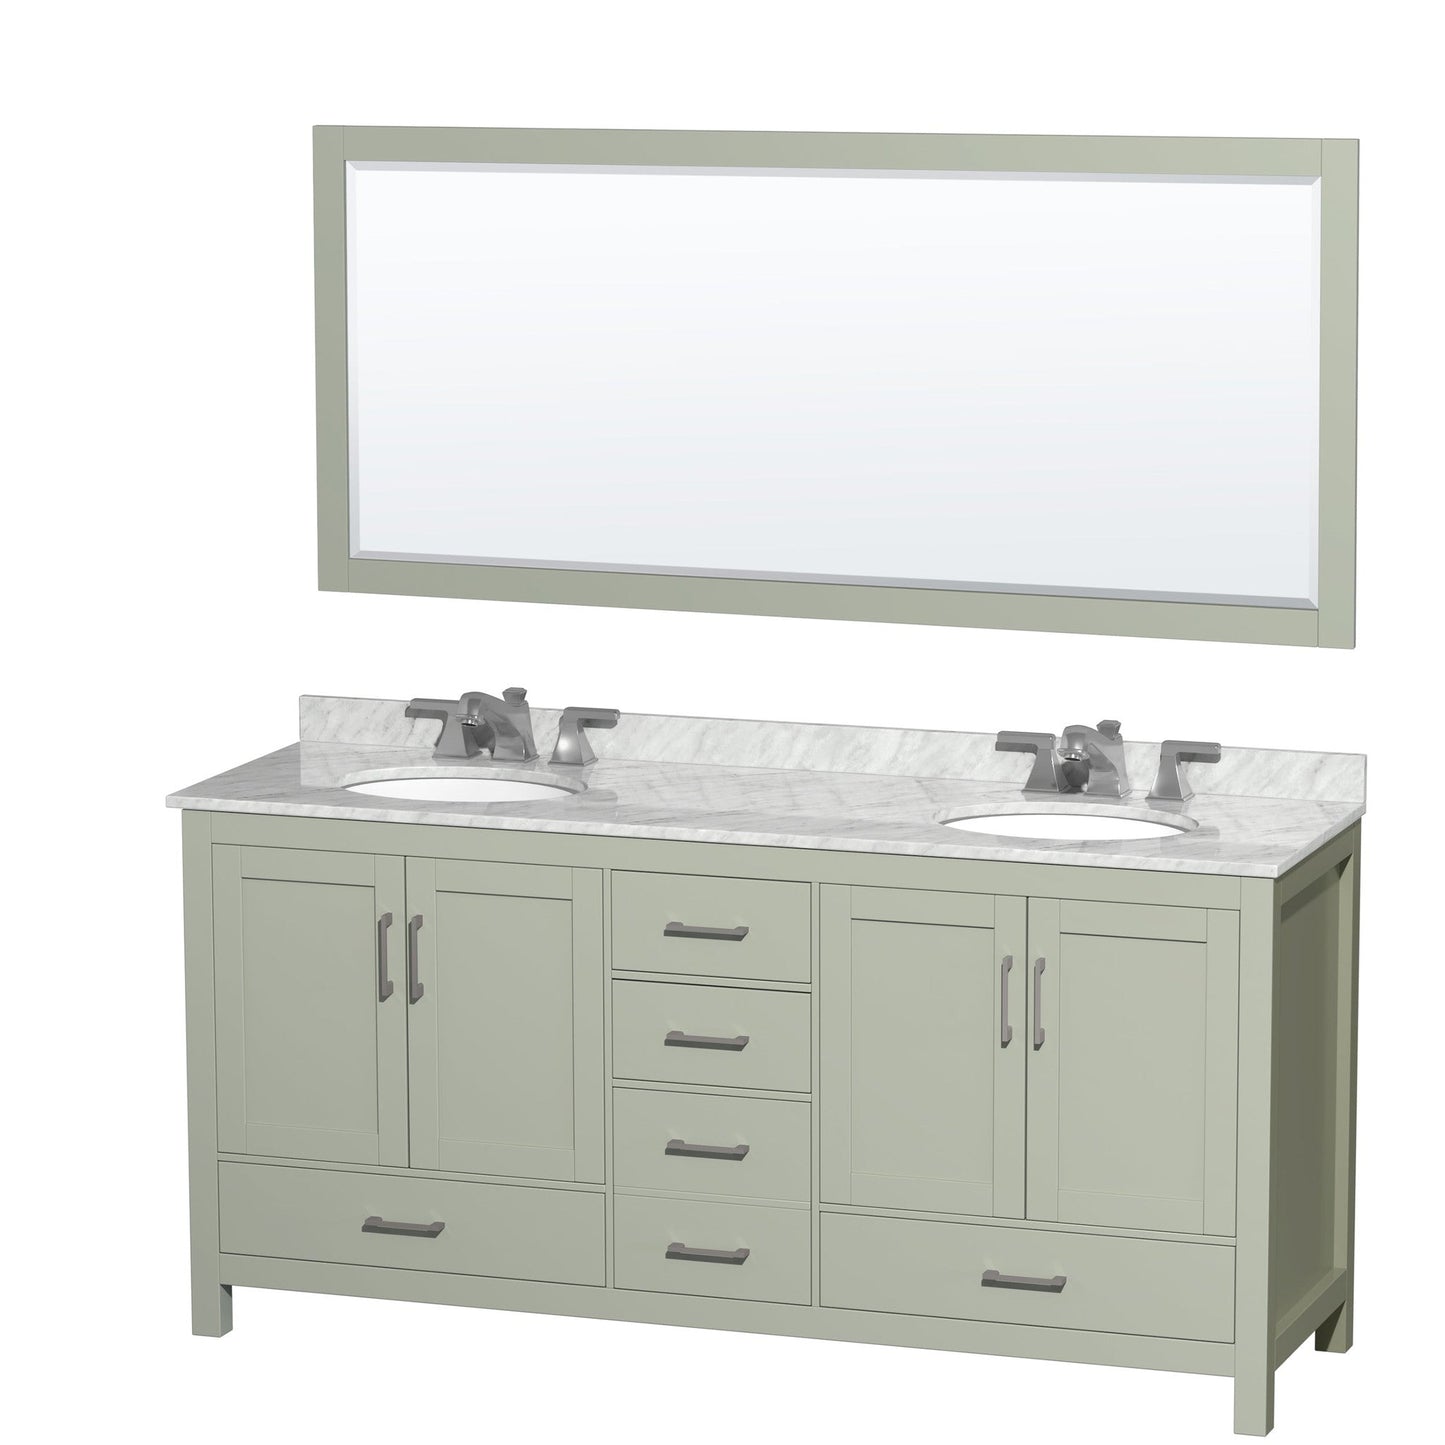 Sheffield 72" Double Bathroom Vanity in Light Green, White Carrara Marble Countertop, Undermount Oval Sinks, Brushed Nickel Trim, 70" Mirror